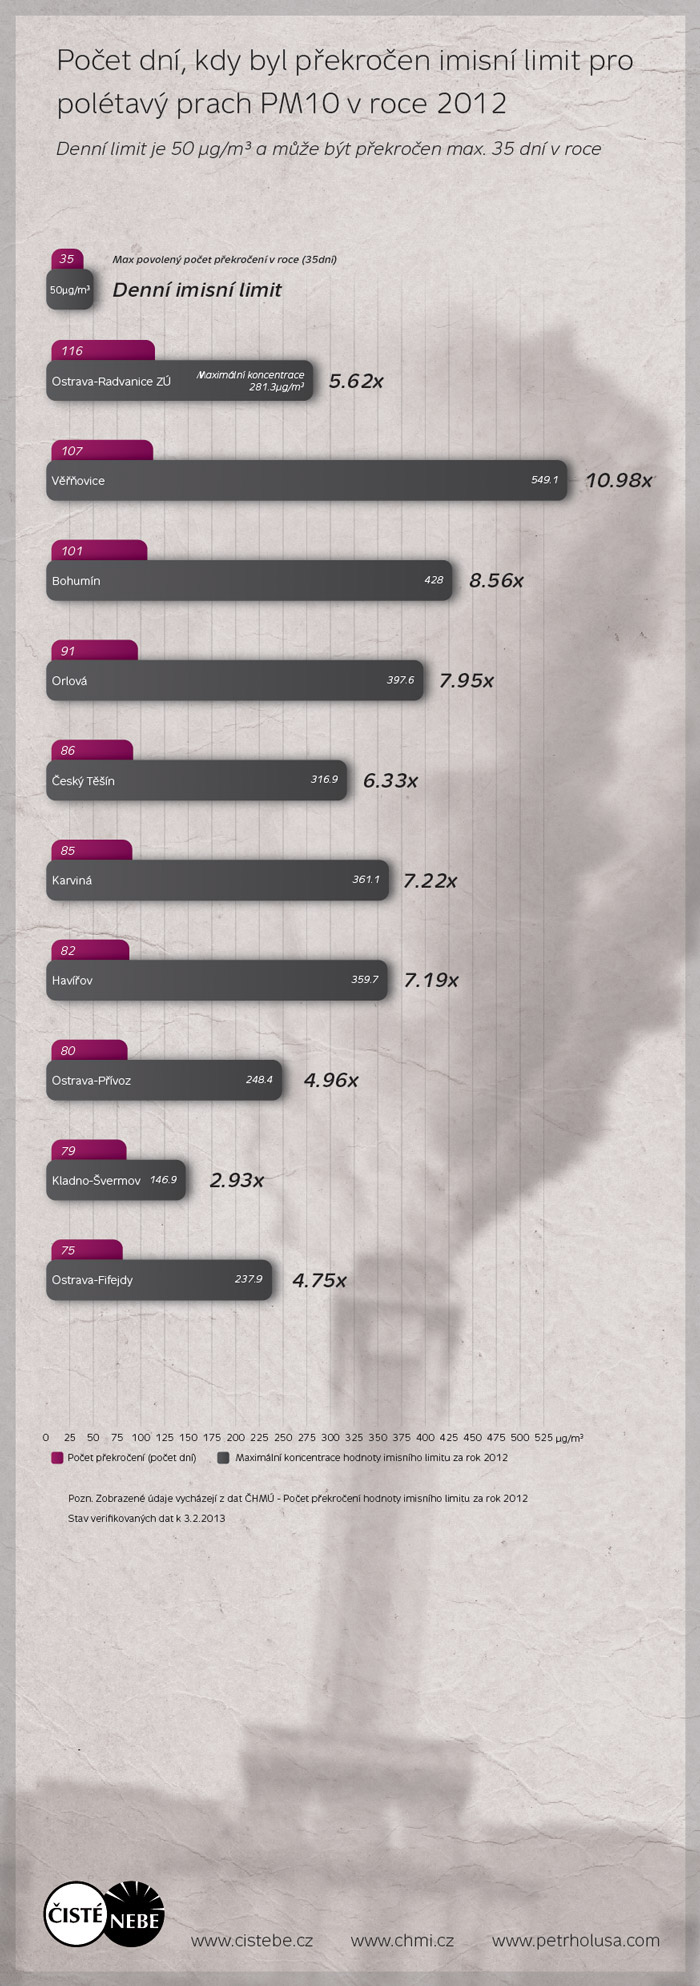 Adobe Portfolio infographics  info factory pollution industrial  smog Air Pollution